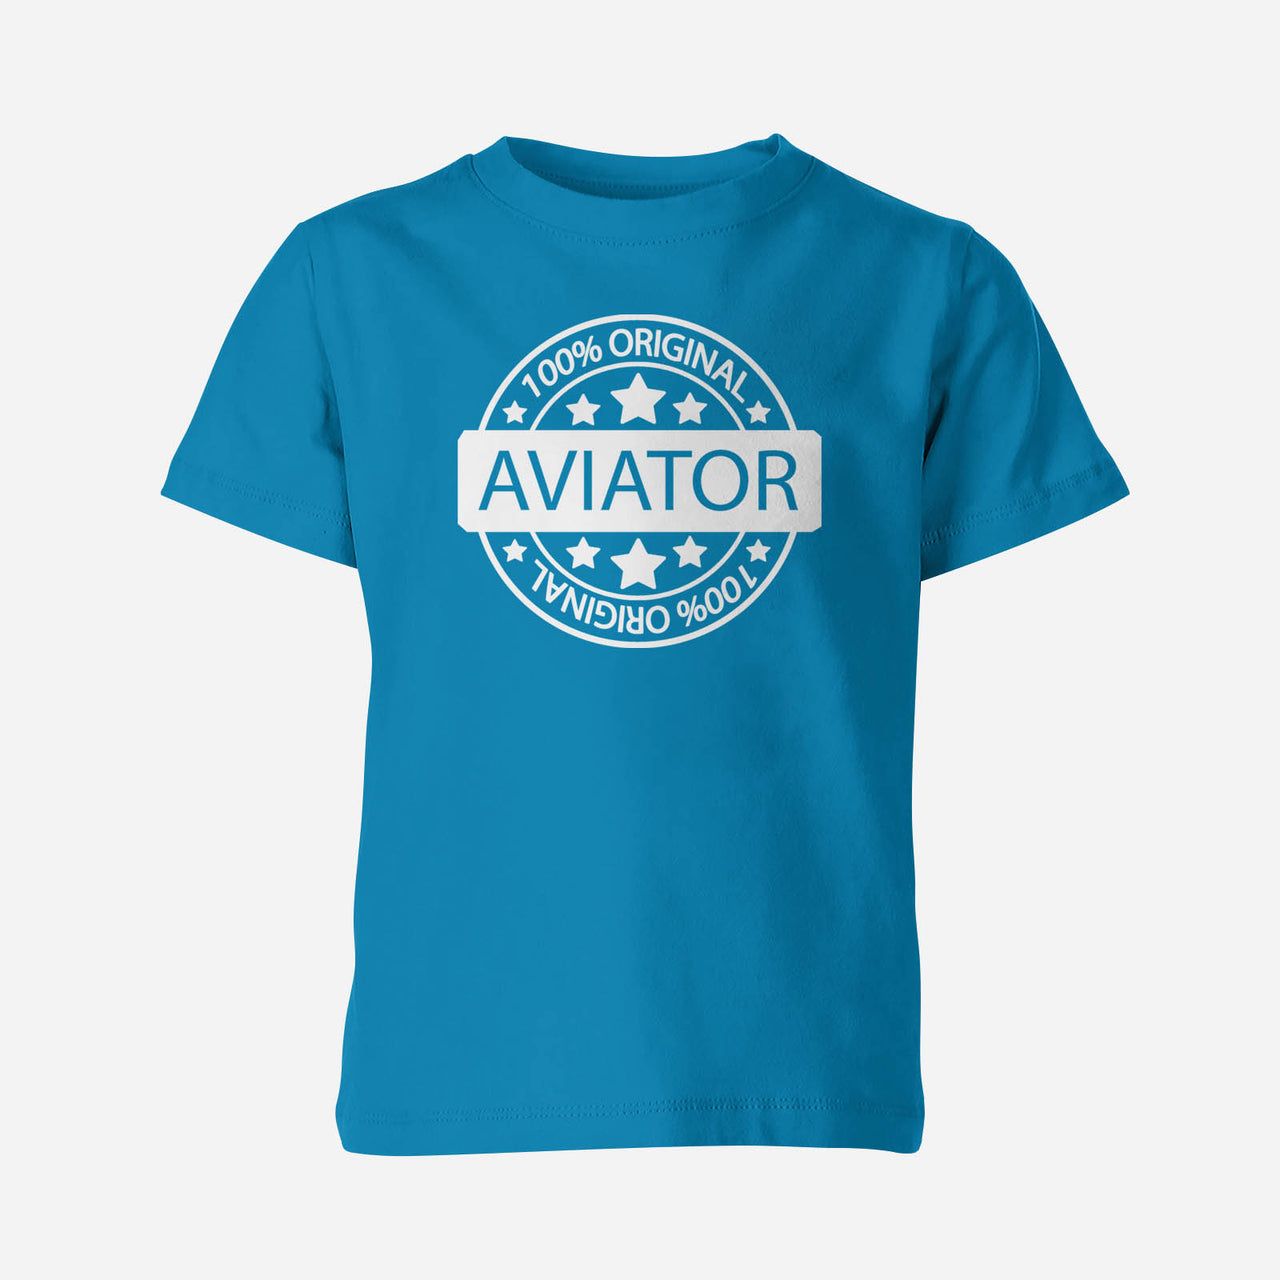 %100 Original Aviator Designed Children T-Shirts